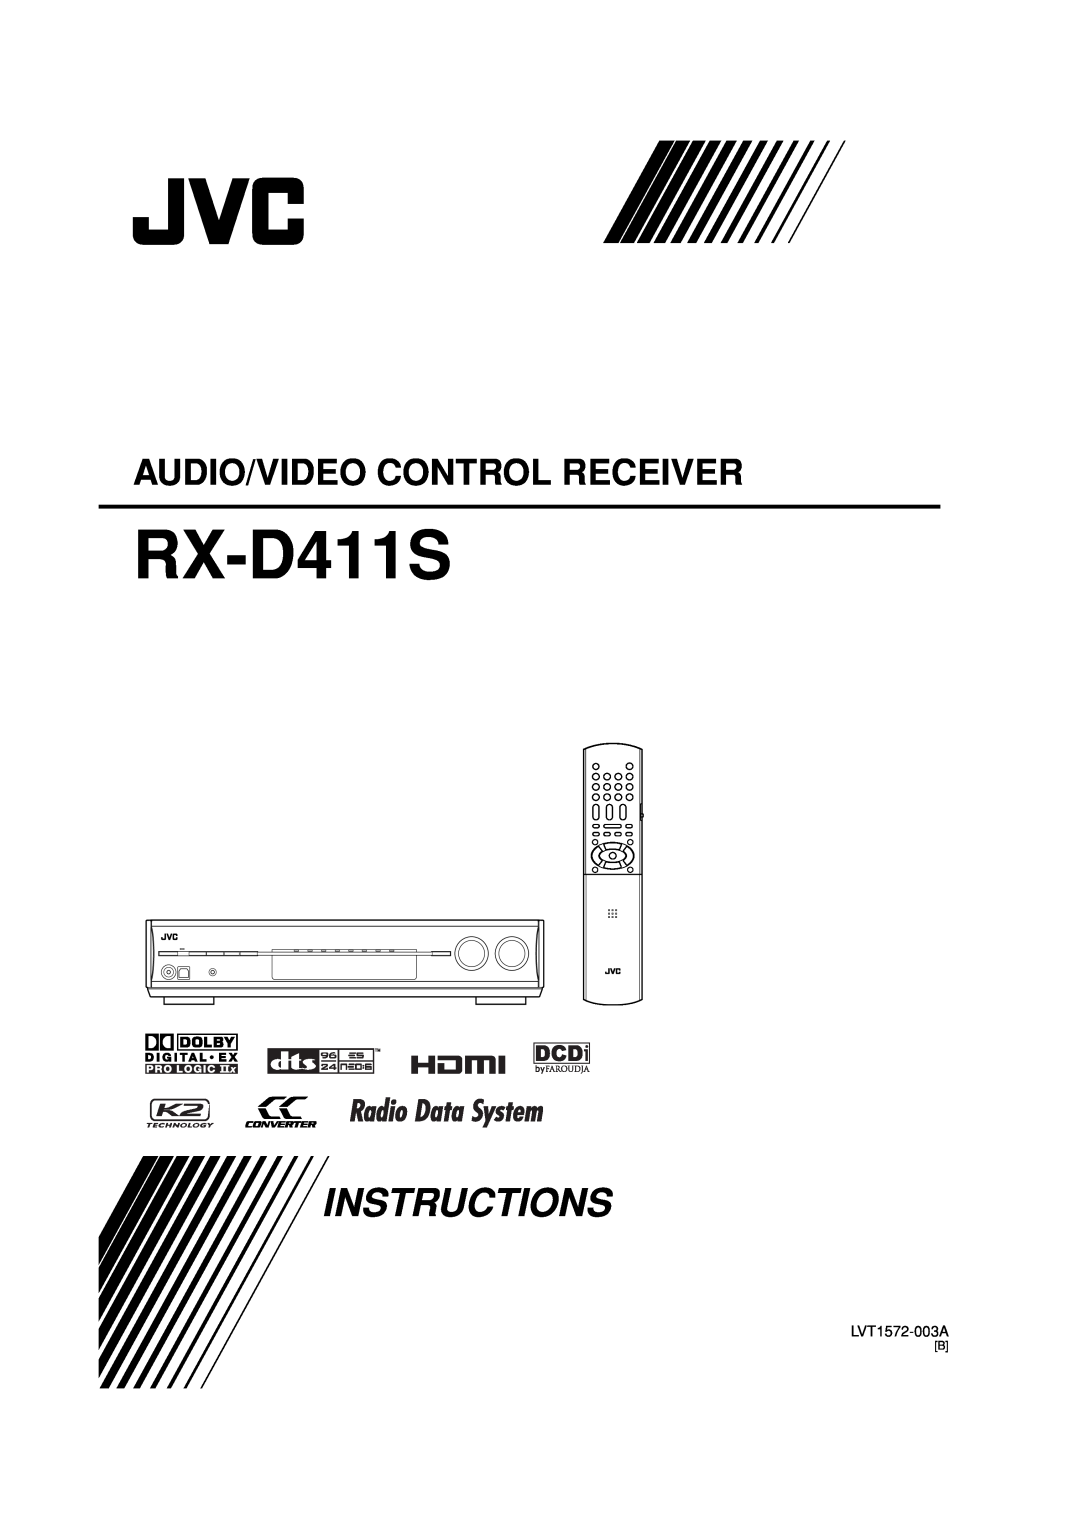 JVC RX-D411S manual Instructions, Audio/Video Control Receiver, LVT1572-003A 